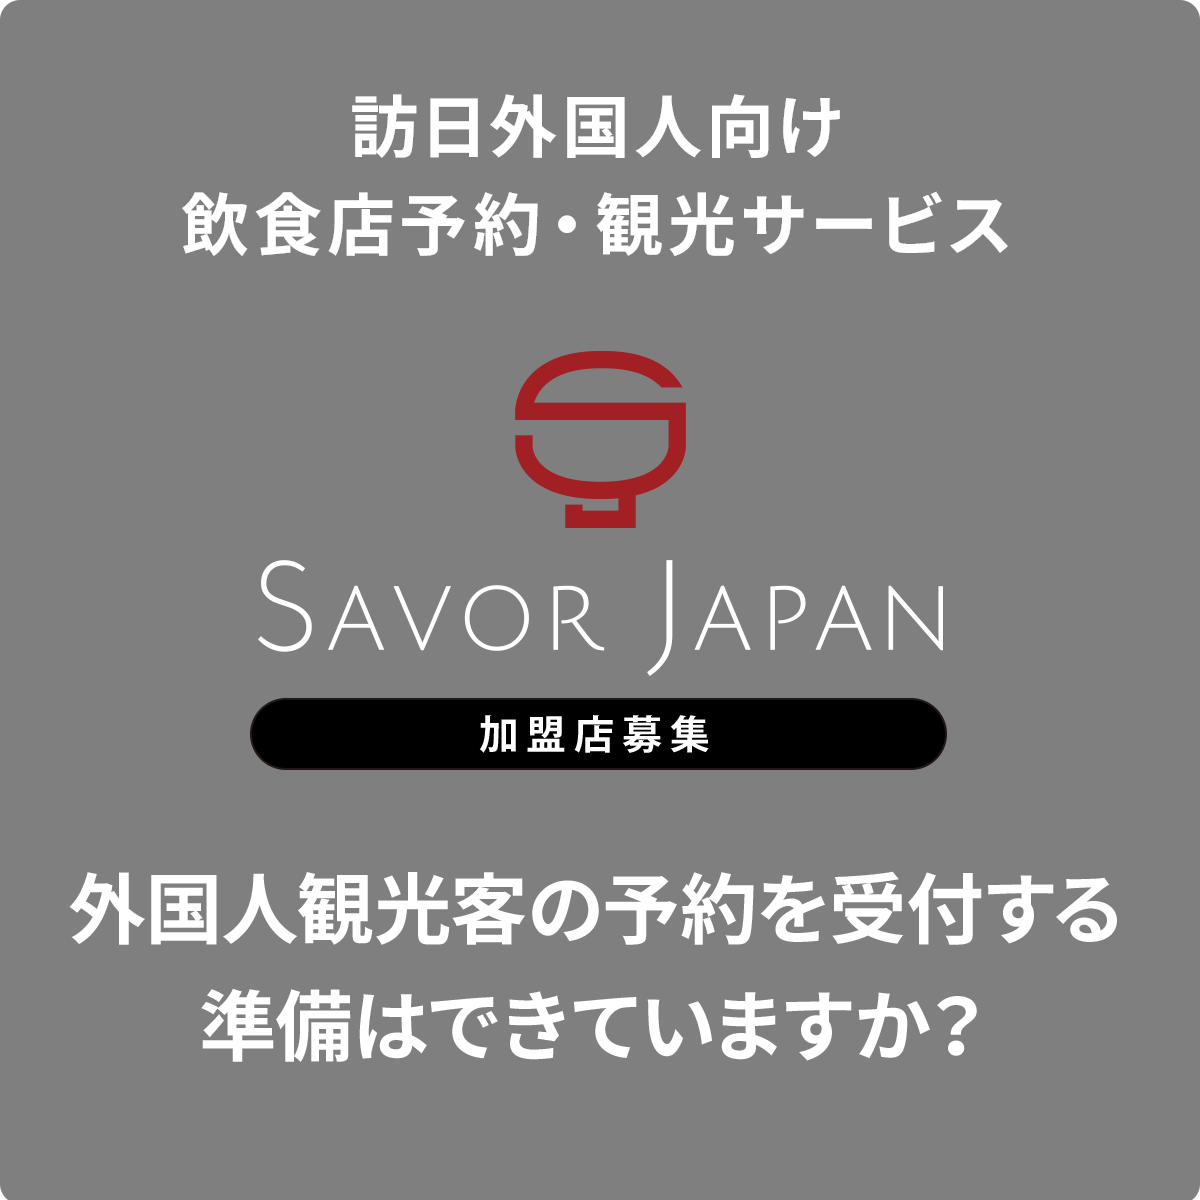 SAVOR JAPAN 加盟店募集